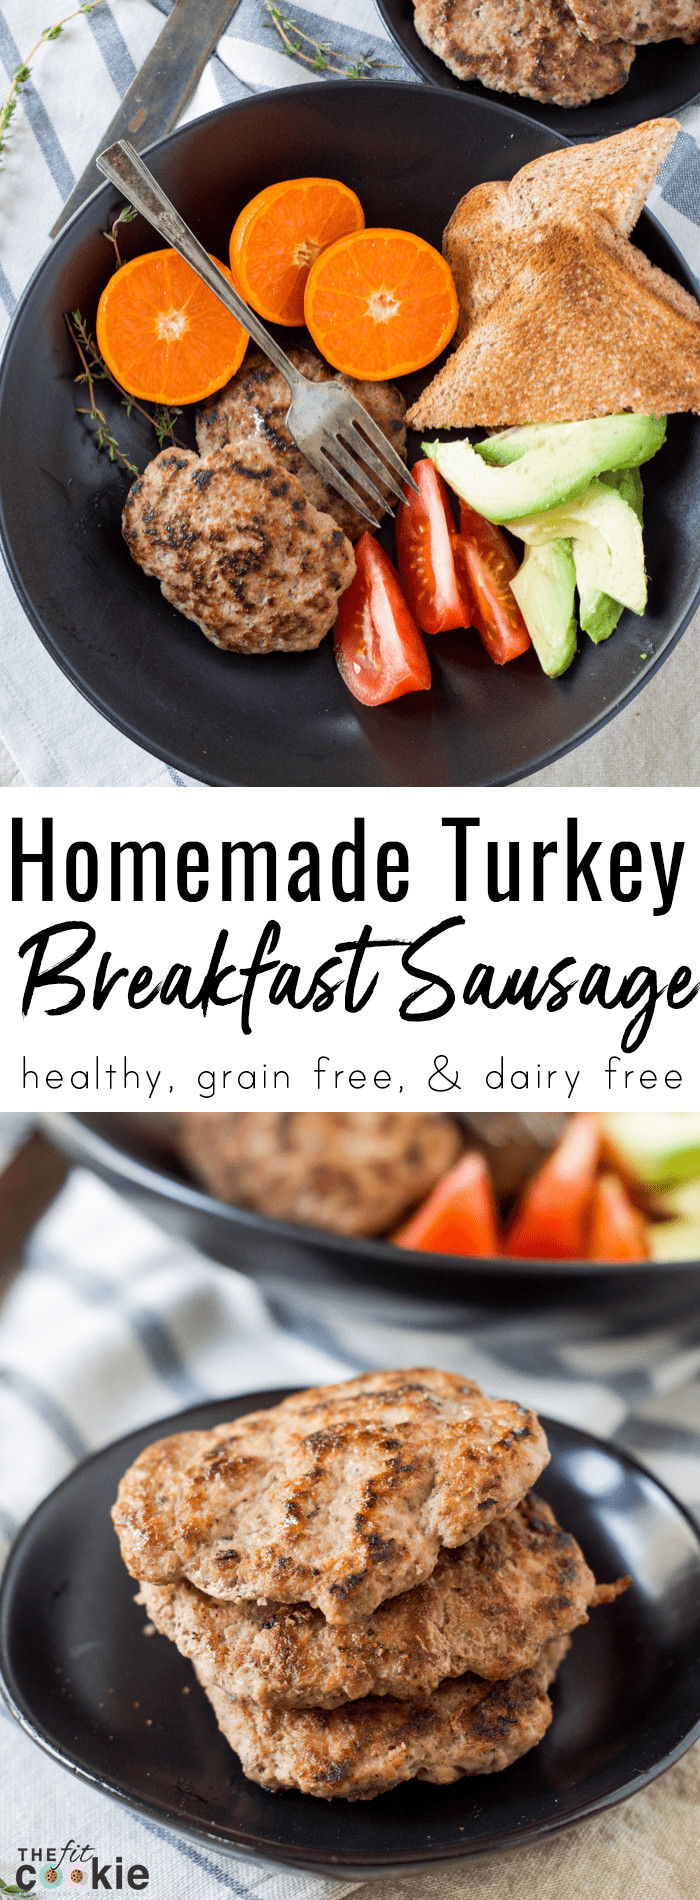 Turkey Sausage Healthy
 Healthy Homemade Turkey Breakfast Sausage Paleo • The